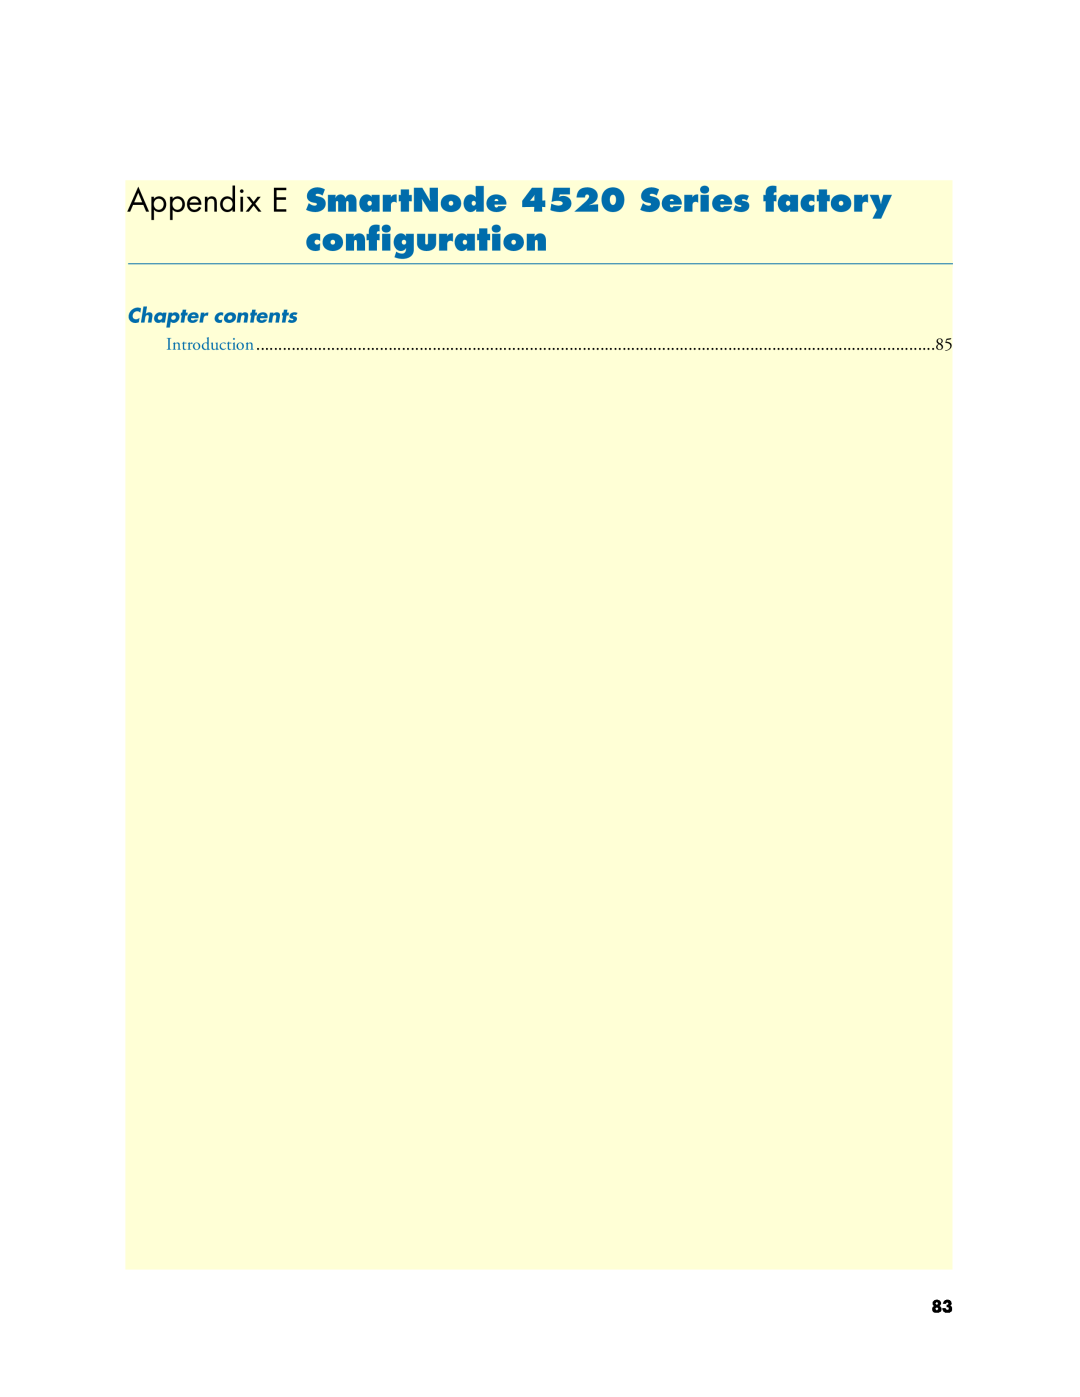 Patton electronic manual Appendix E SmartNode 4520 Series factory conﬁguration, Chapter contents 